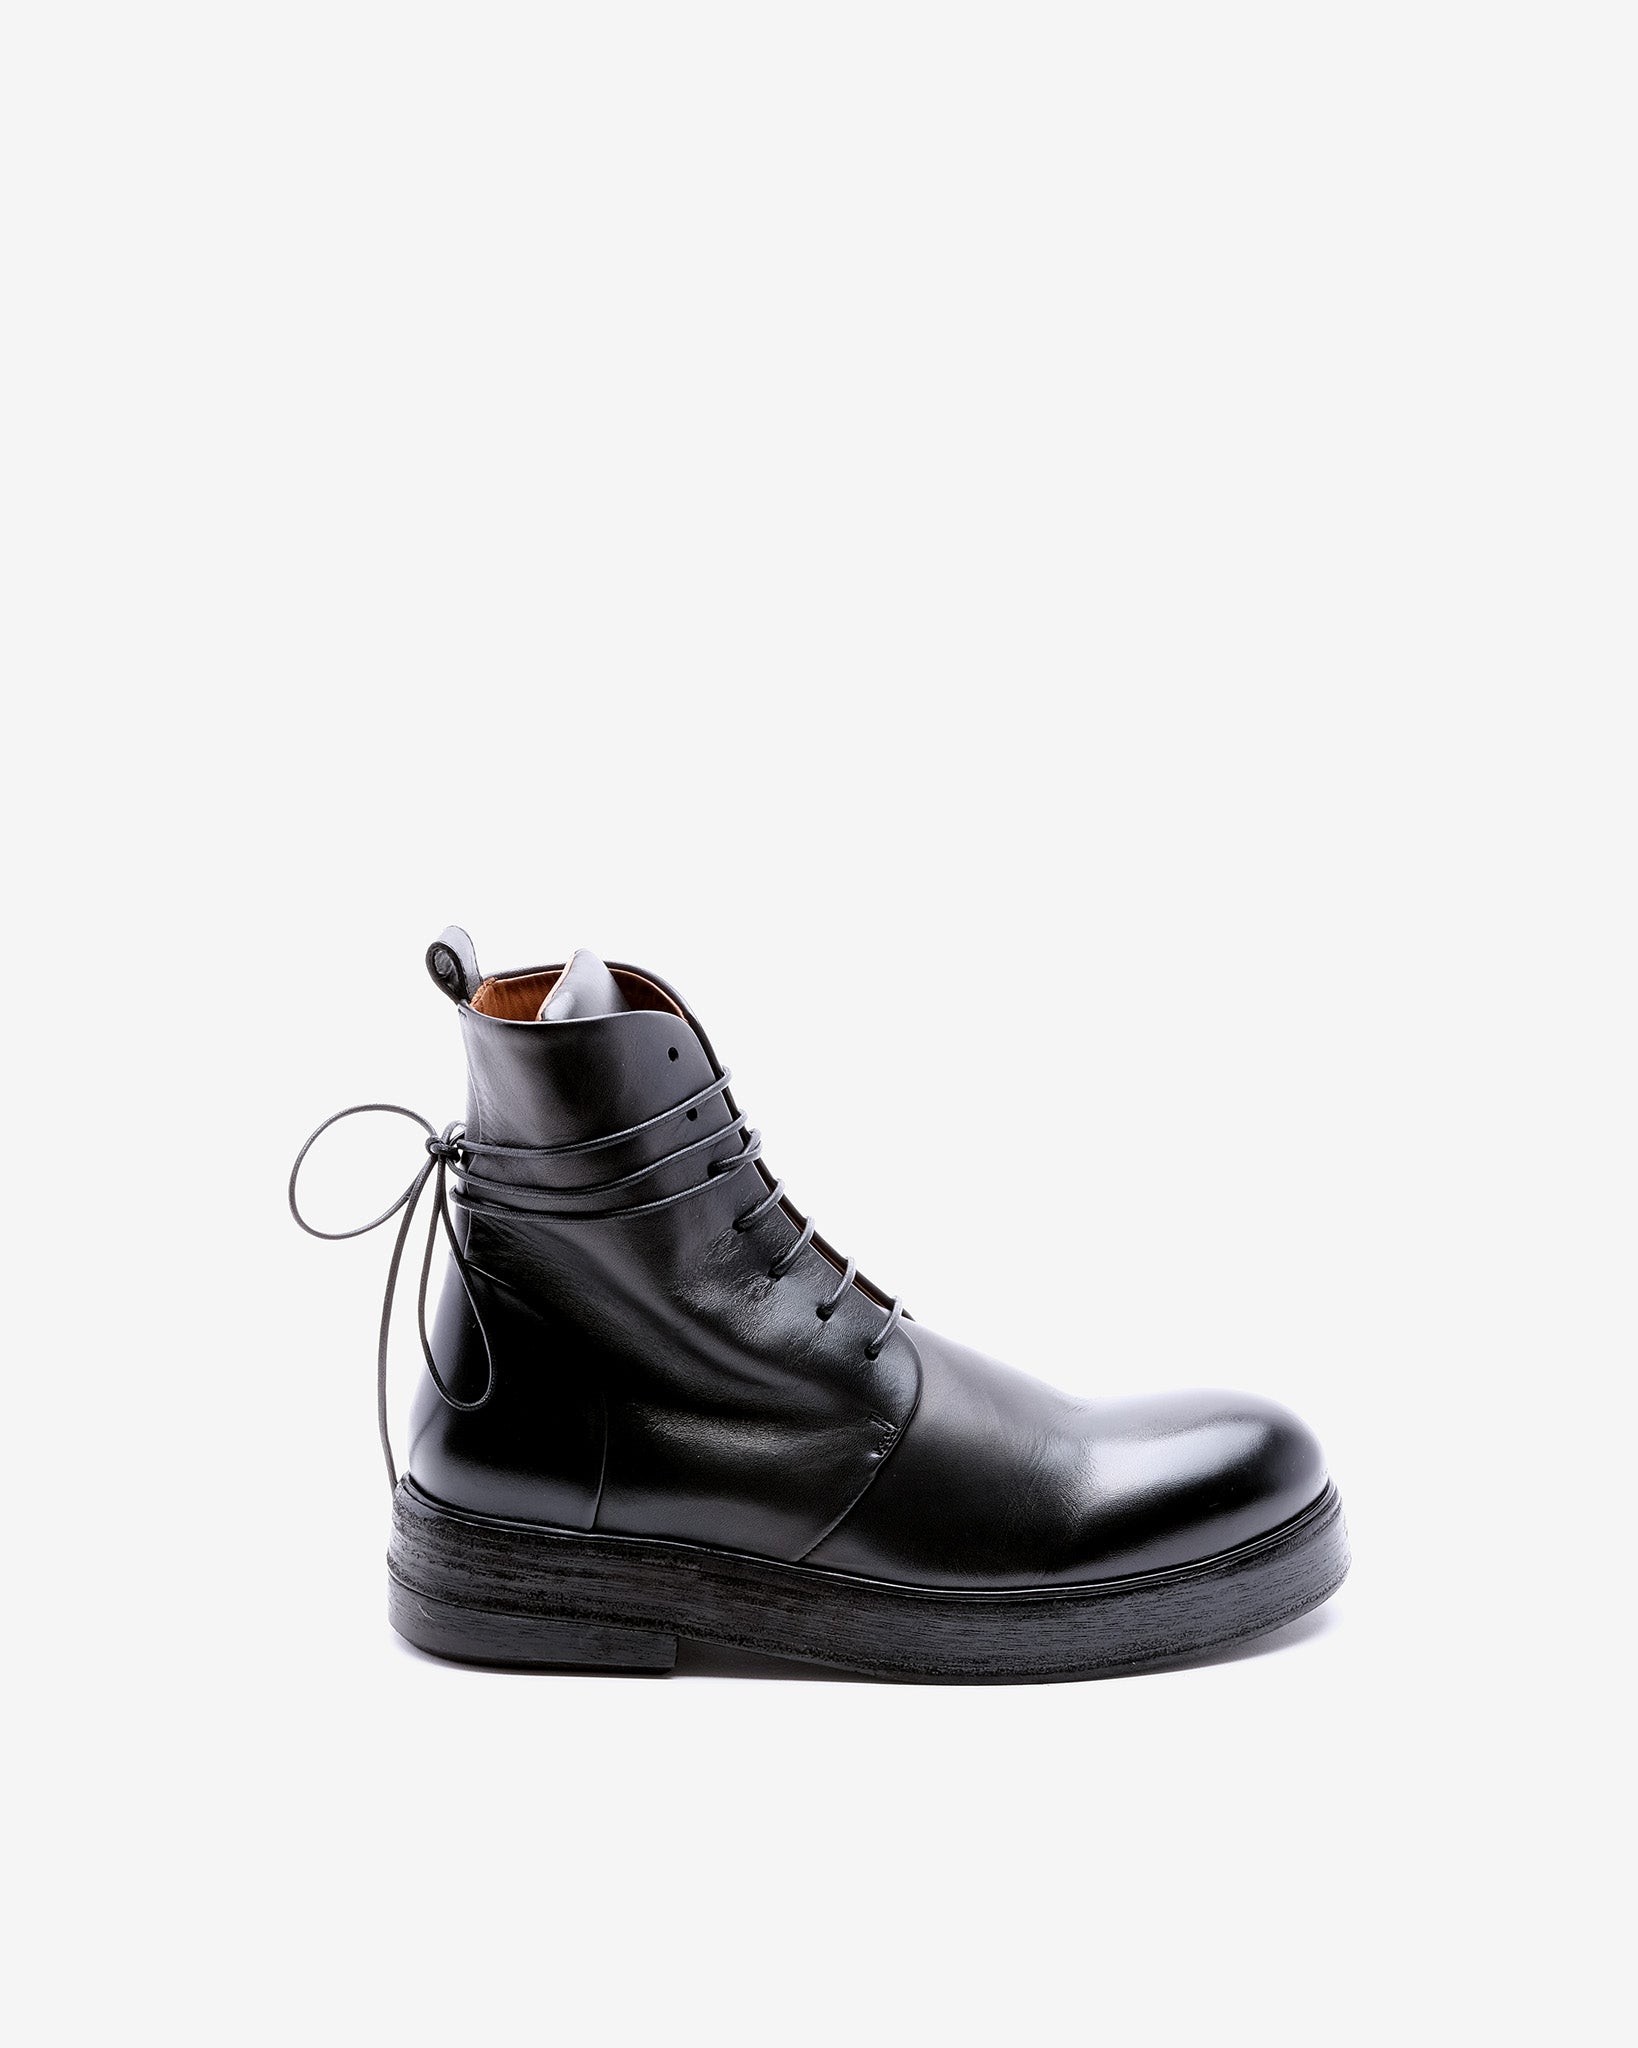 Zuccolona MW5191 Black Leather Boots